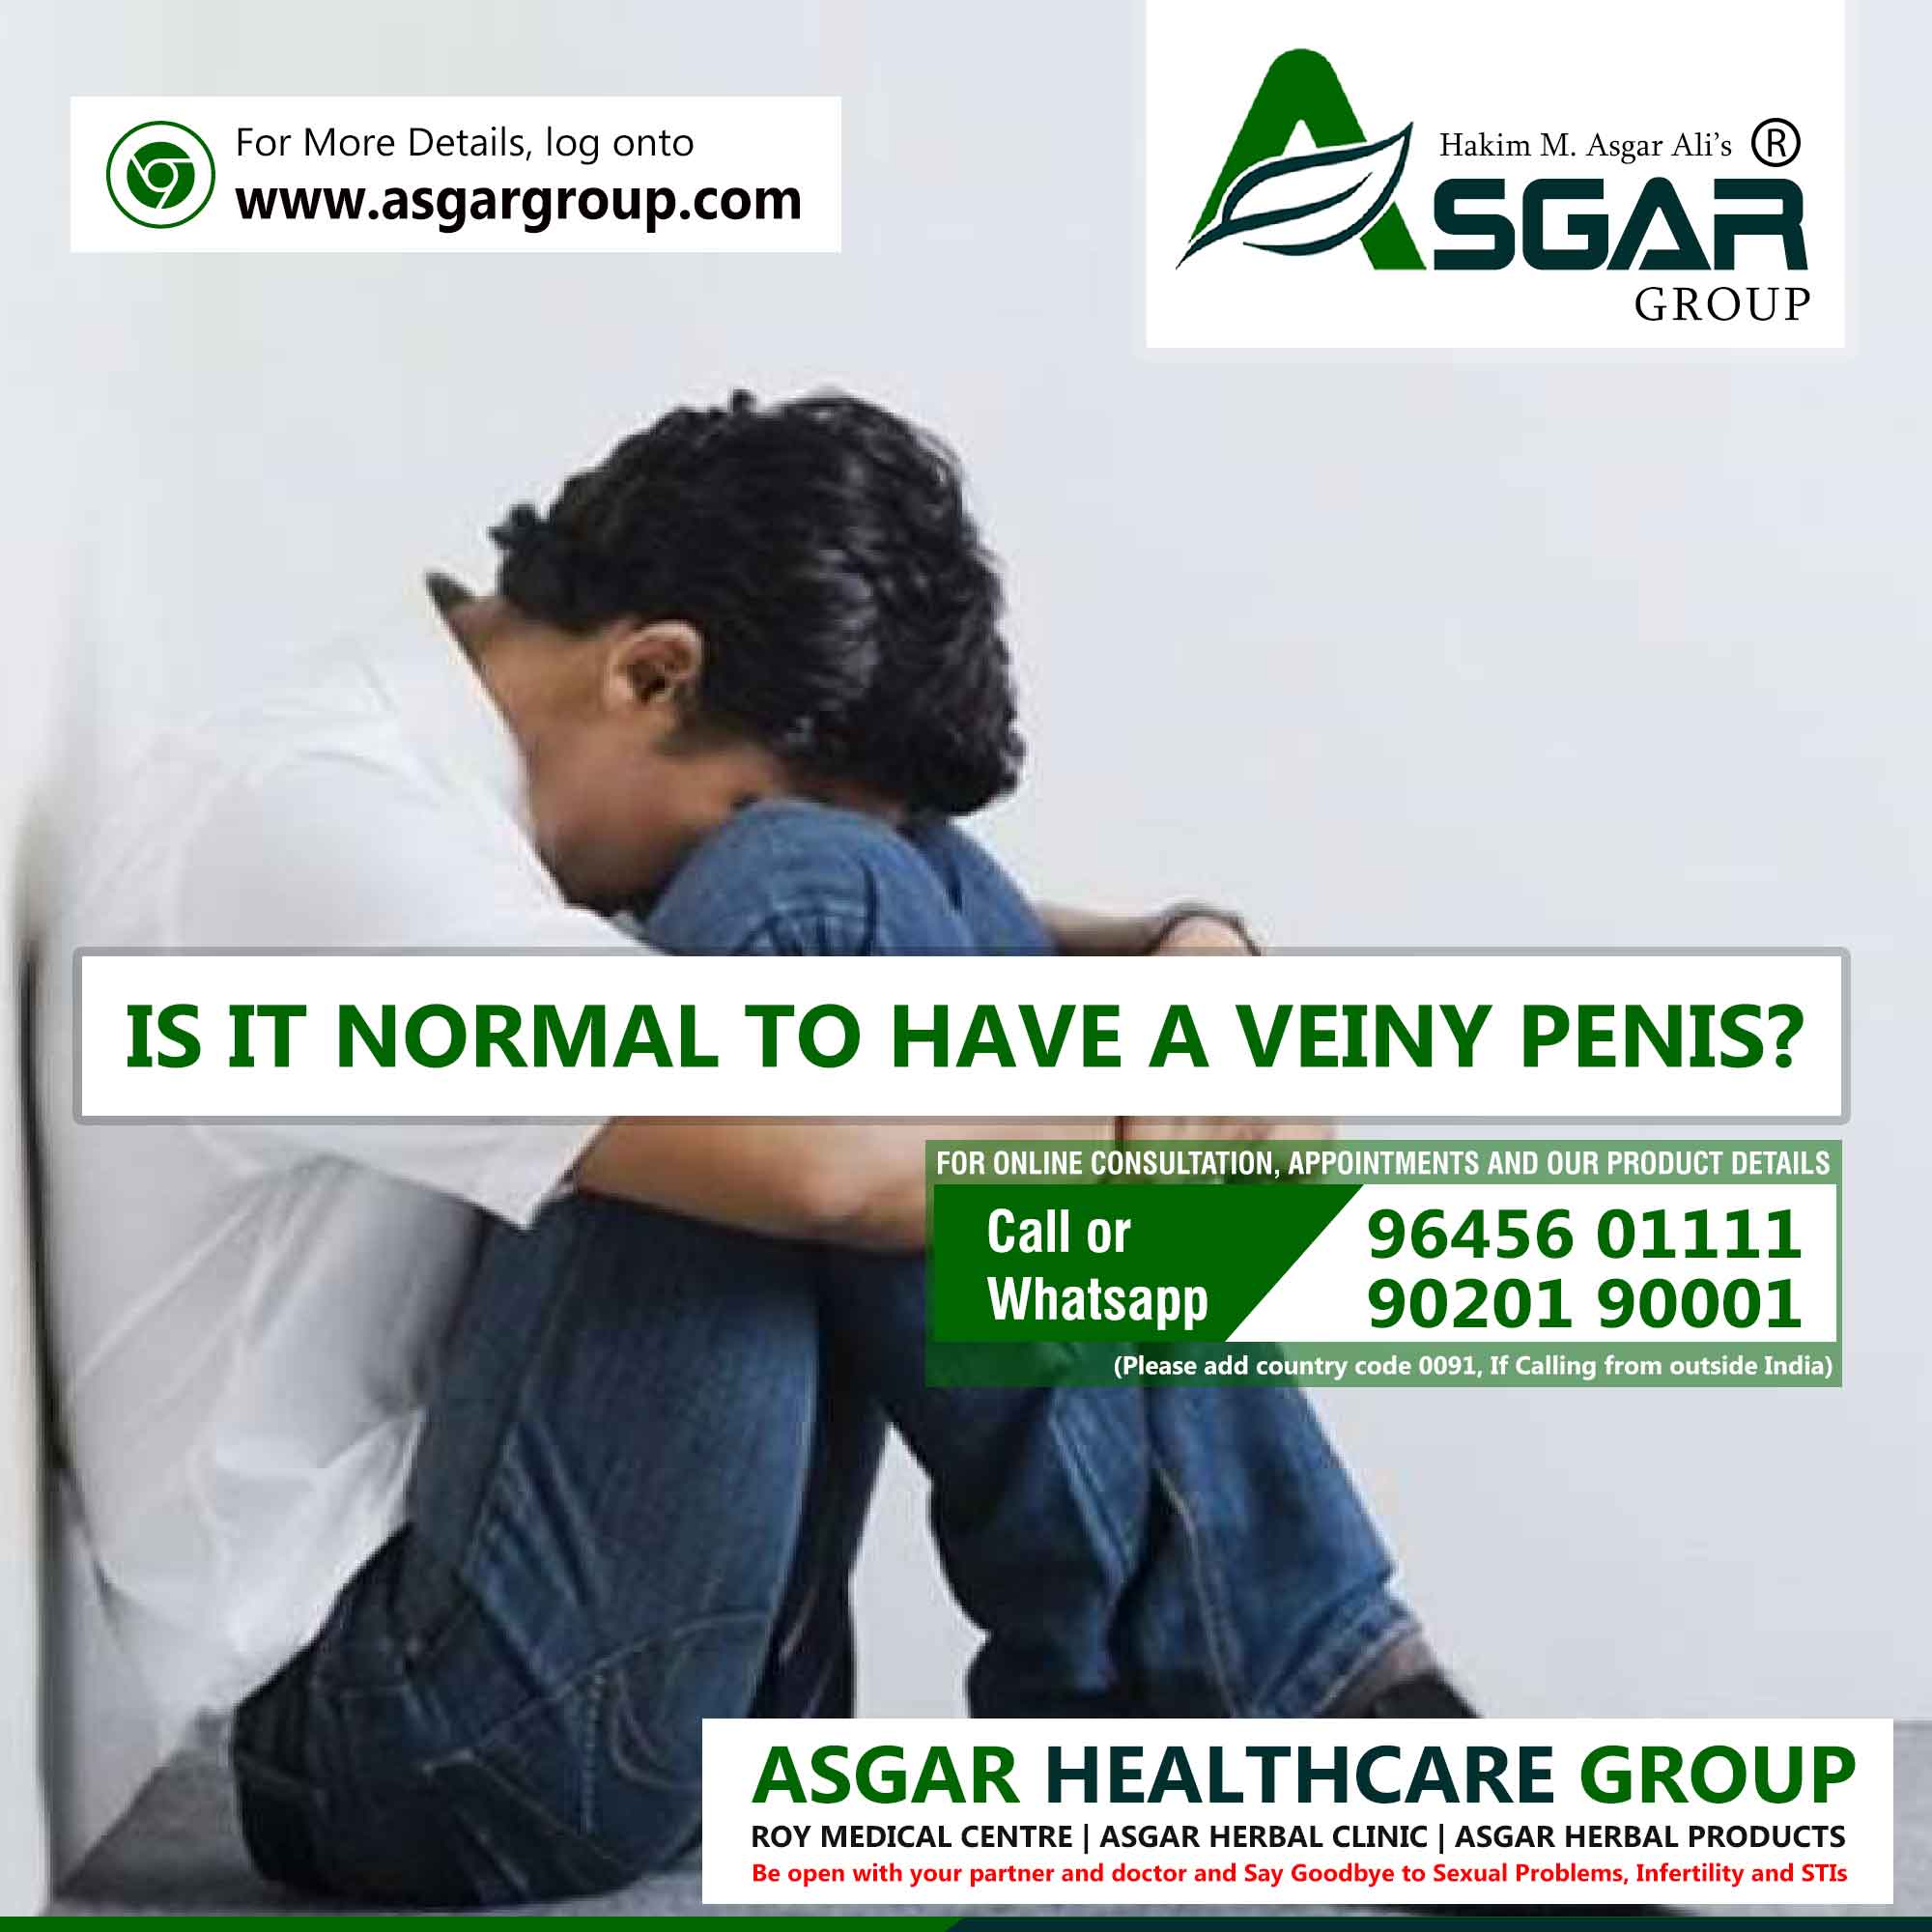 veiny penis causes symptoms and treatment erection and ejaculation roy medical kerala asgar healthcare tamilnadu asgar group india